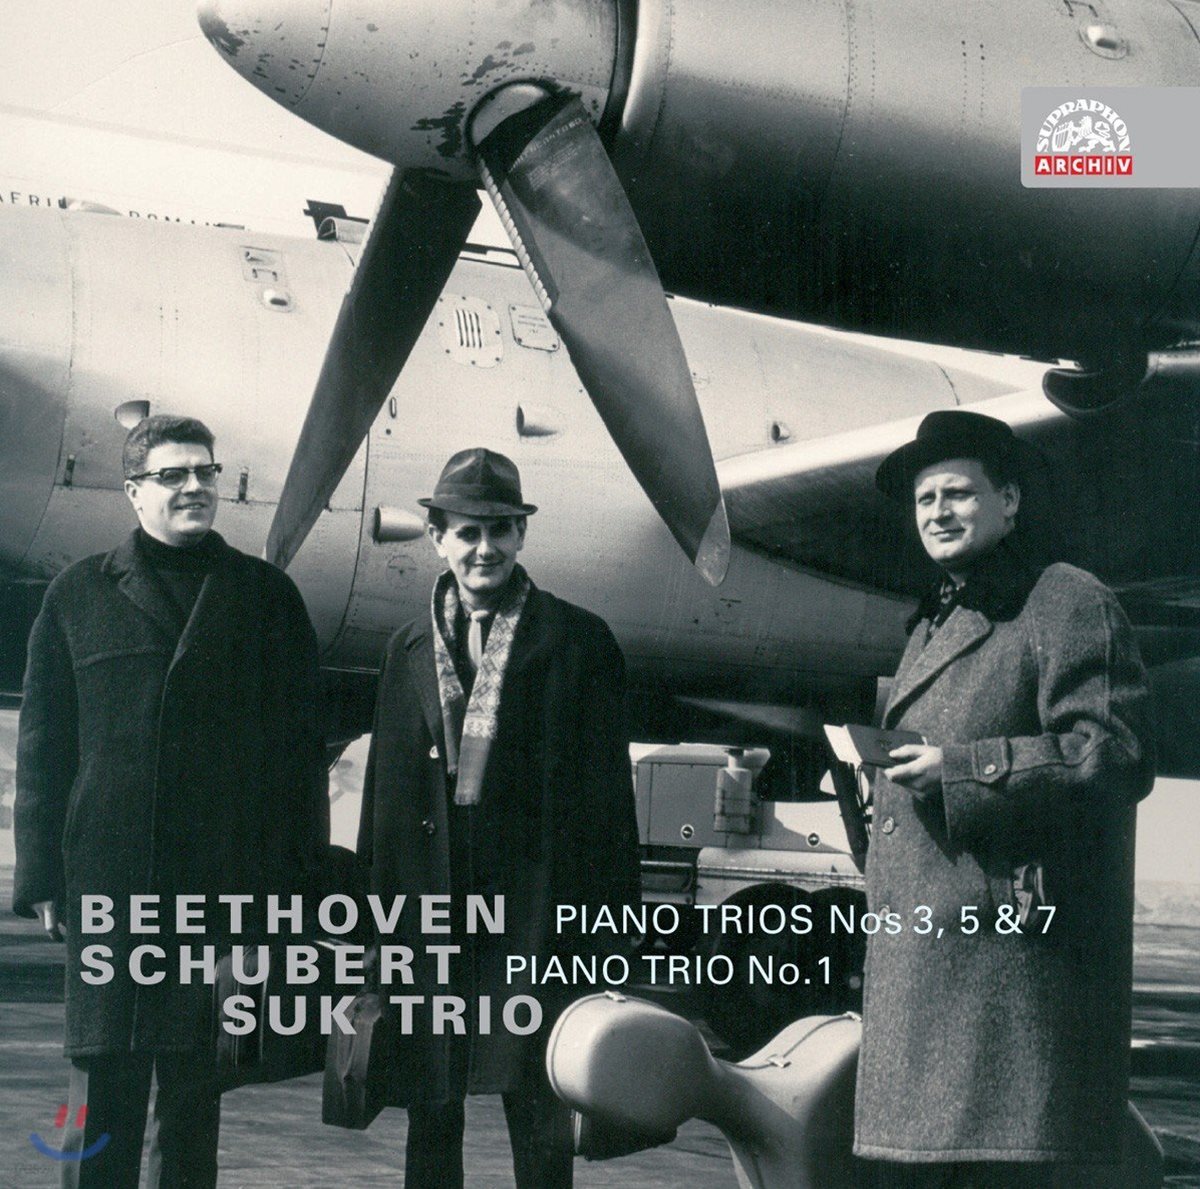 Suk Trio 베토벤 / 슈베르트: 피아노 삼중주 (Beethoven / Schubert: Piano Trios)